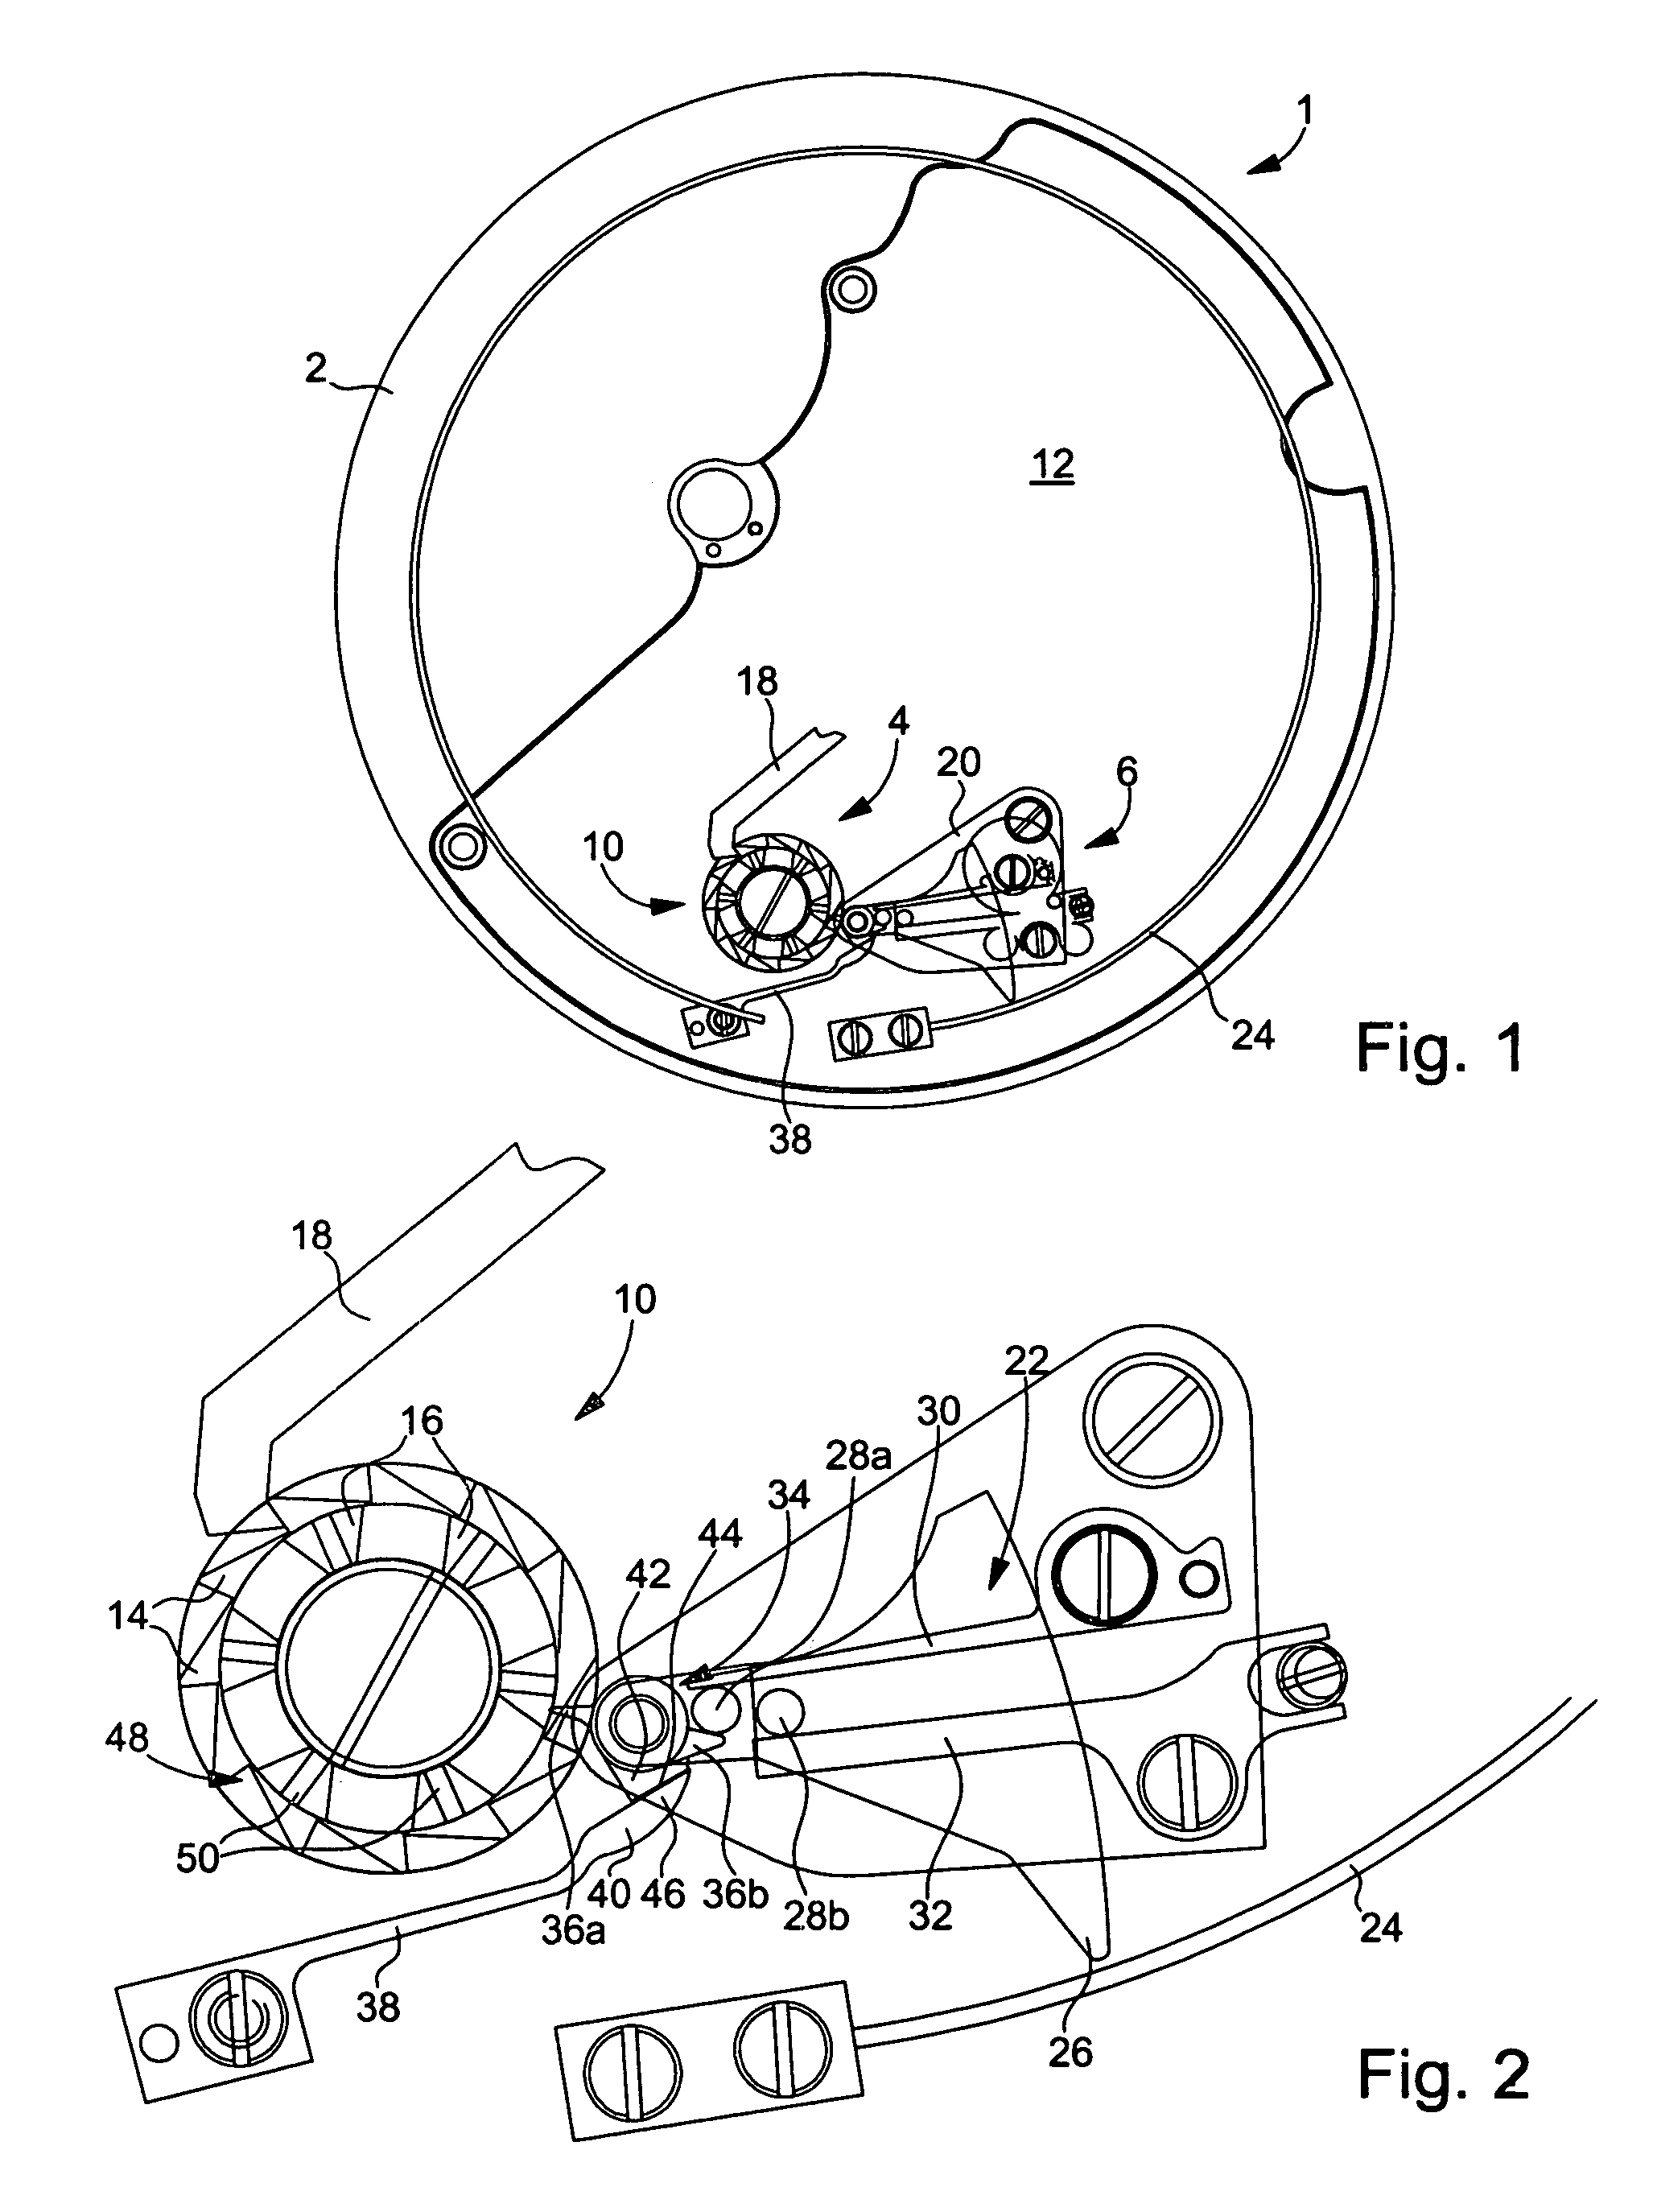 Instrument for measuring intervals of time comprising a ringing mechanism